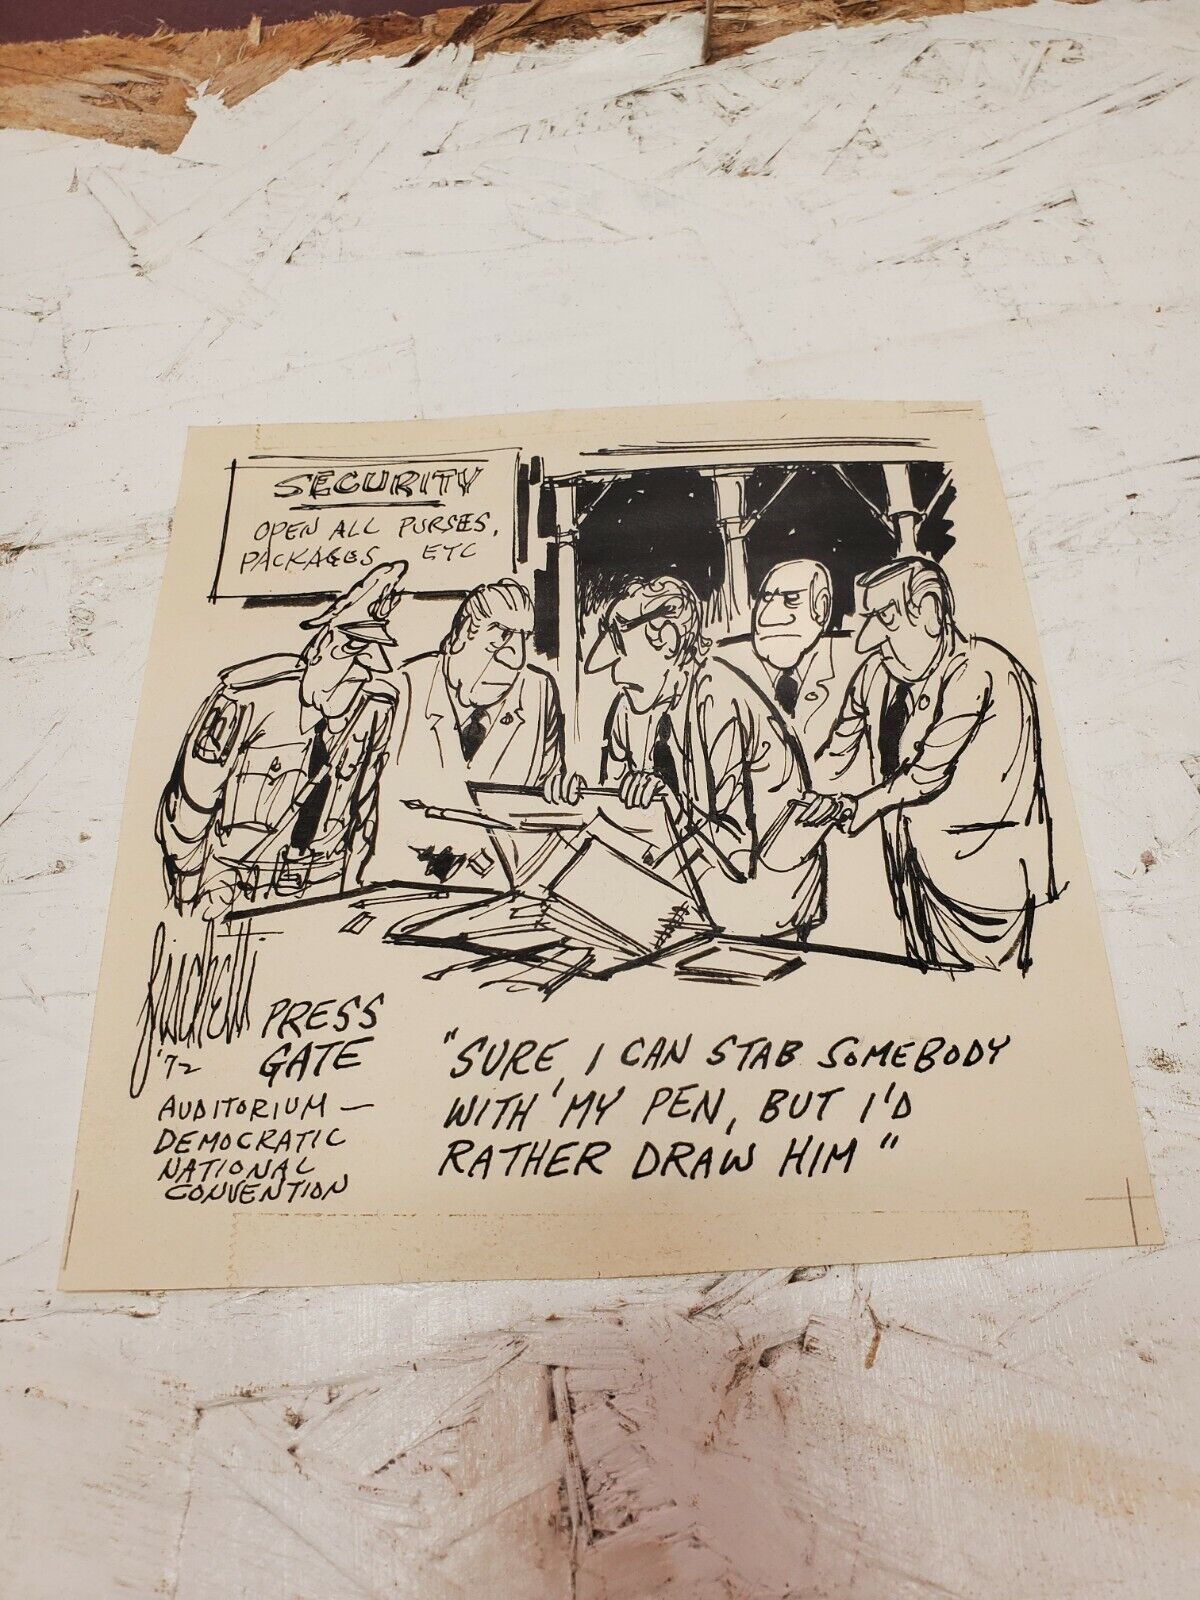 Hand Drawn and Signed John Fischetti Political Cartoon 1972 Press Gate Watergate